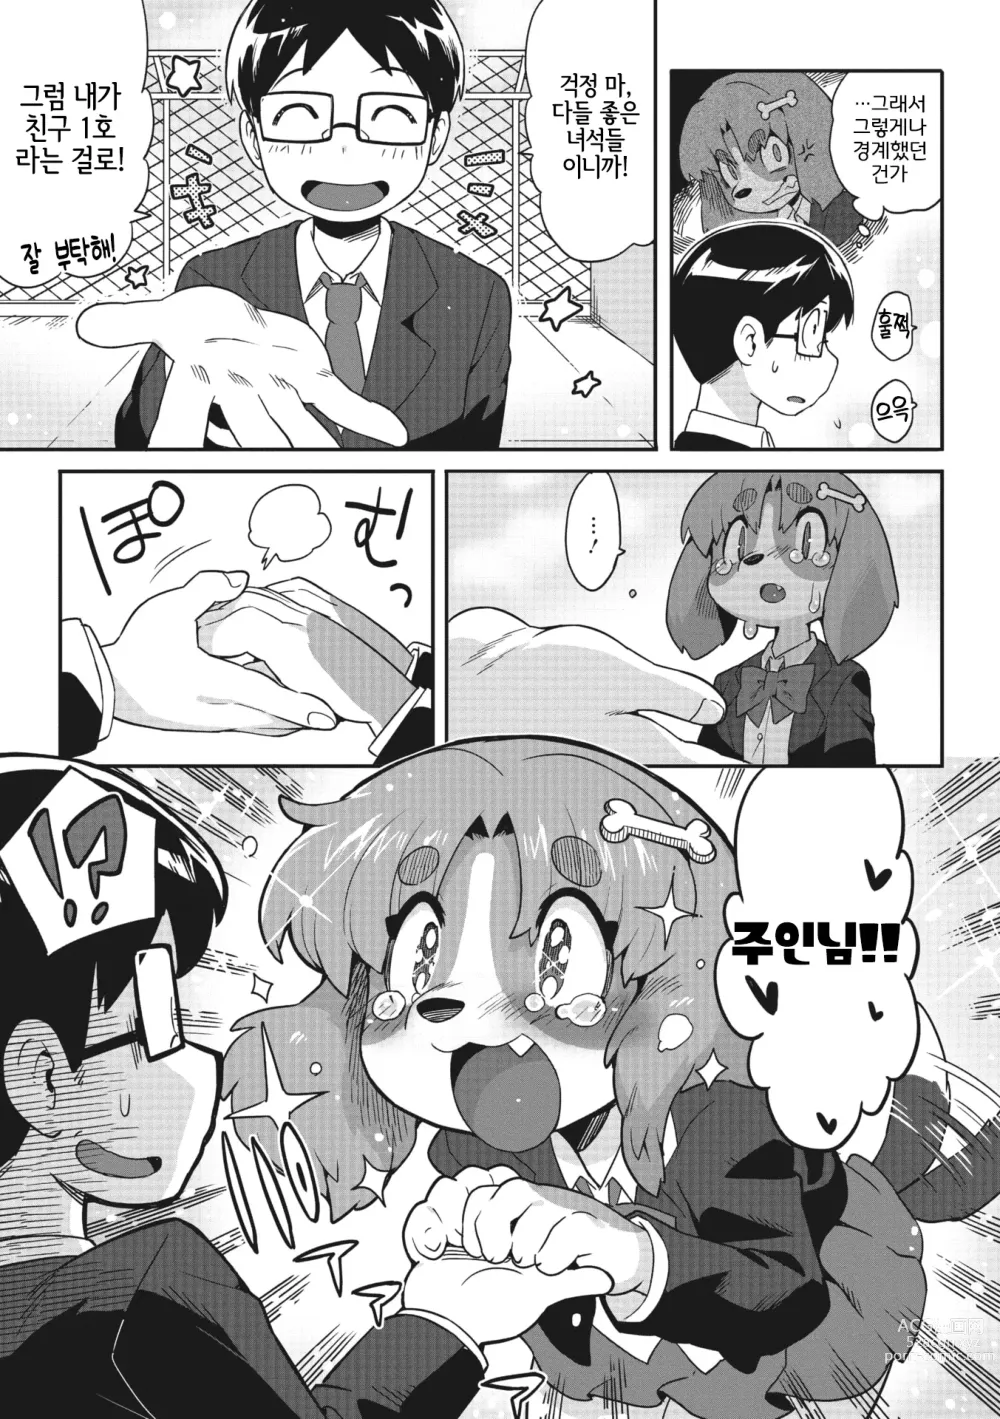 Page 7 of manga  주인님!!